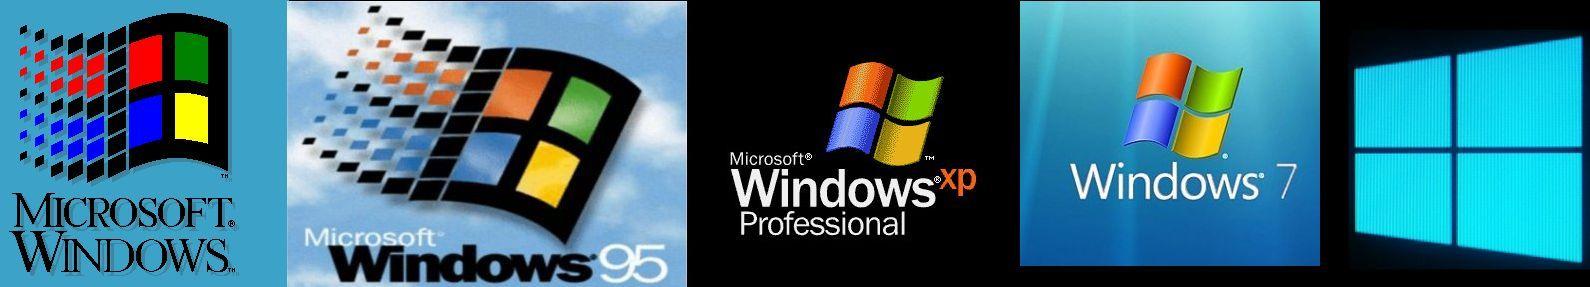 Windows Future Logo - LogoDix